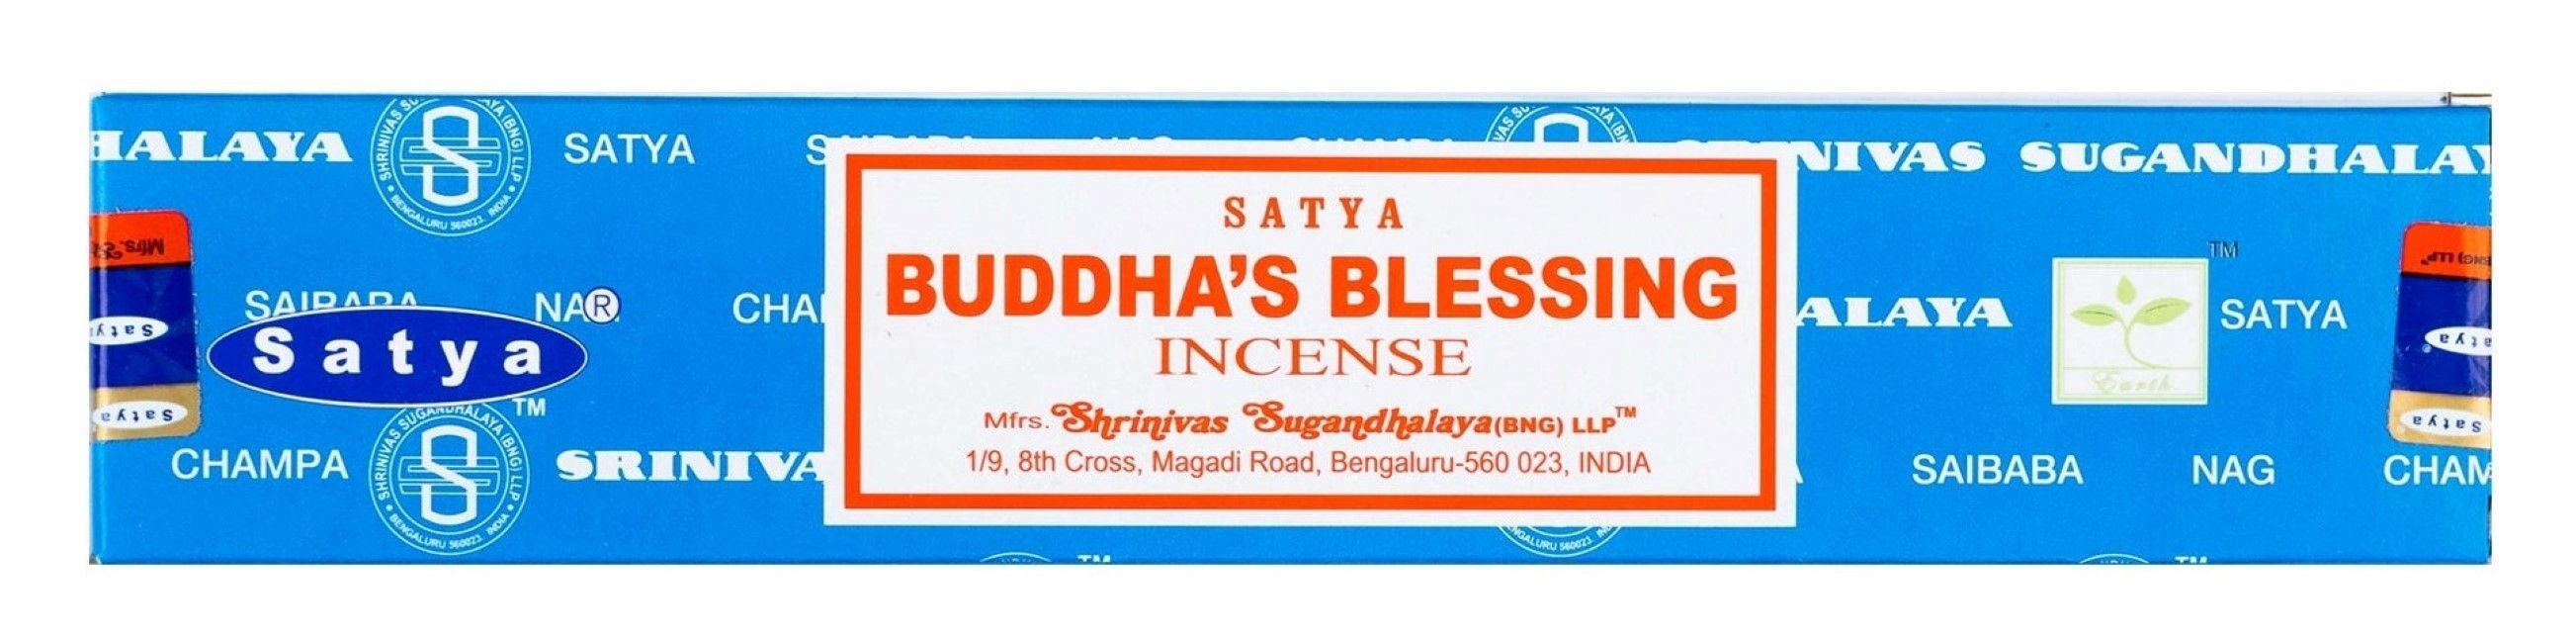 Räucherstäbchen Satya Sai Baba Buddha‘s Blessing 15gr